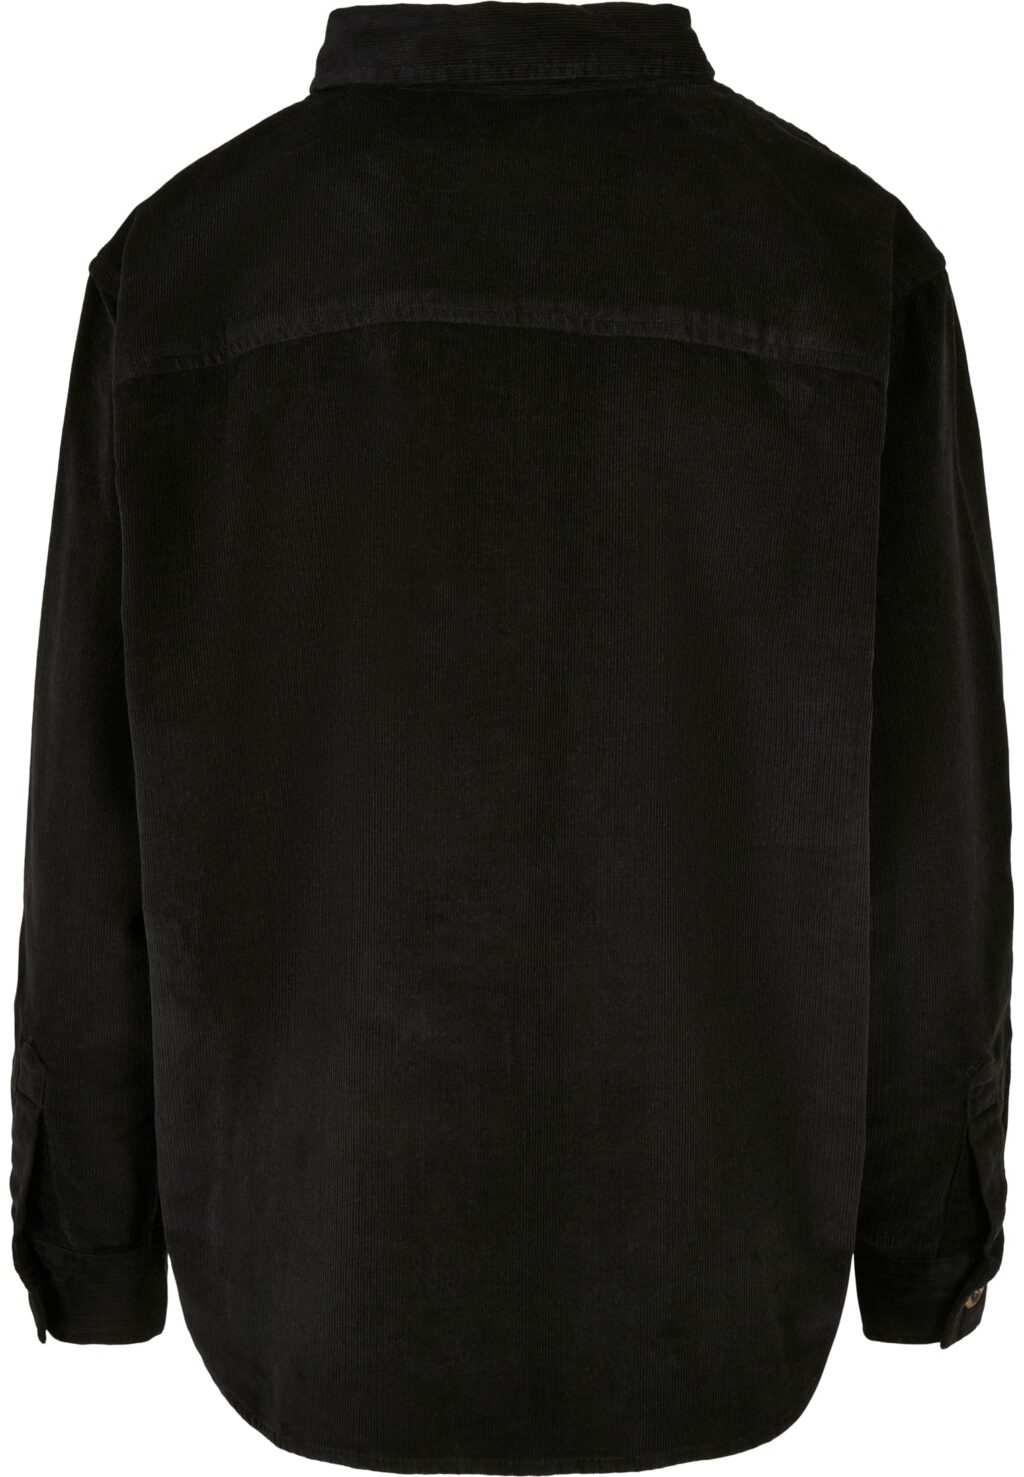 Urban Classics Ladies Corduroy Oversized Shirt black TB3755